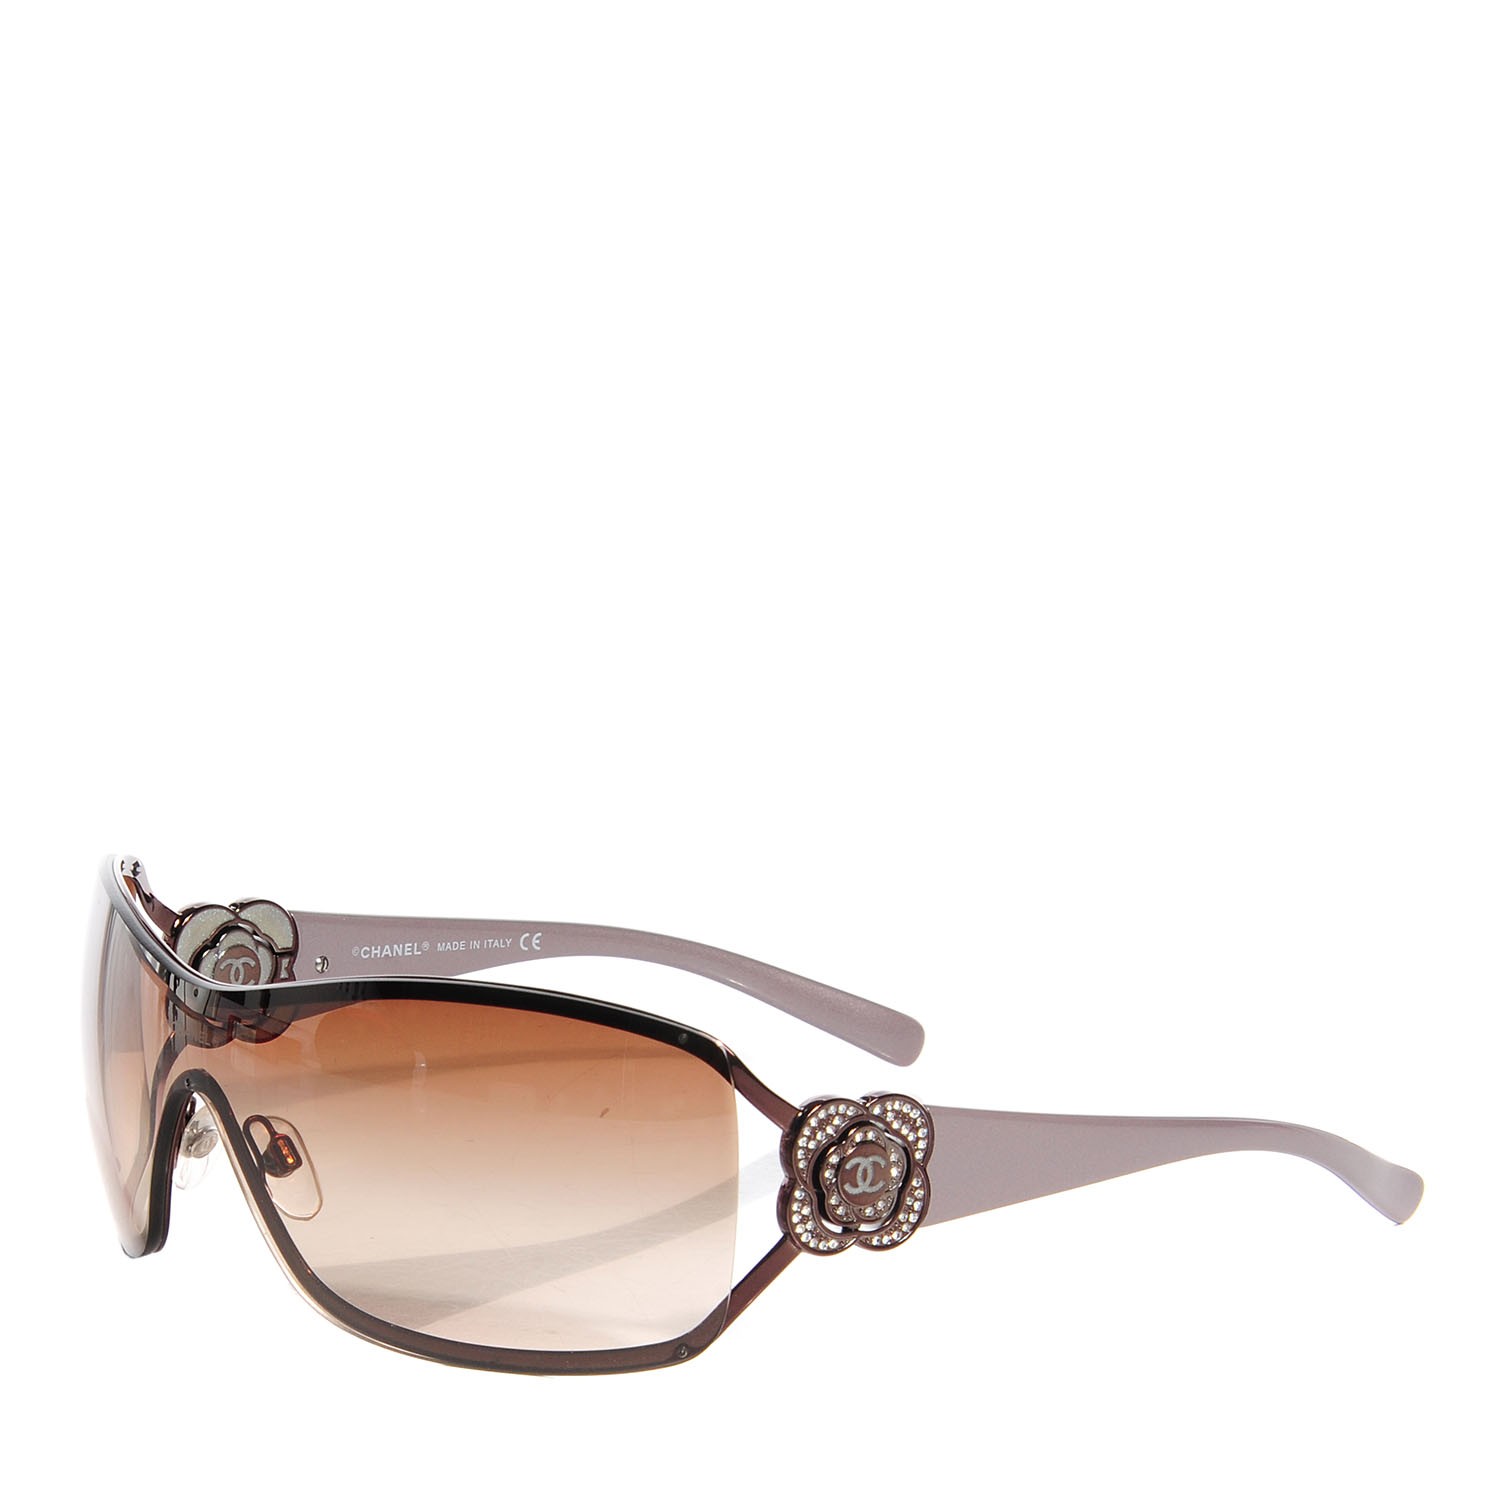 CHANEL Swarovski Crystal Camellia CC Sunglasses 4164-B 97333